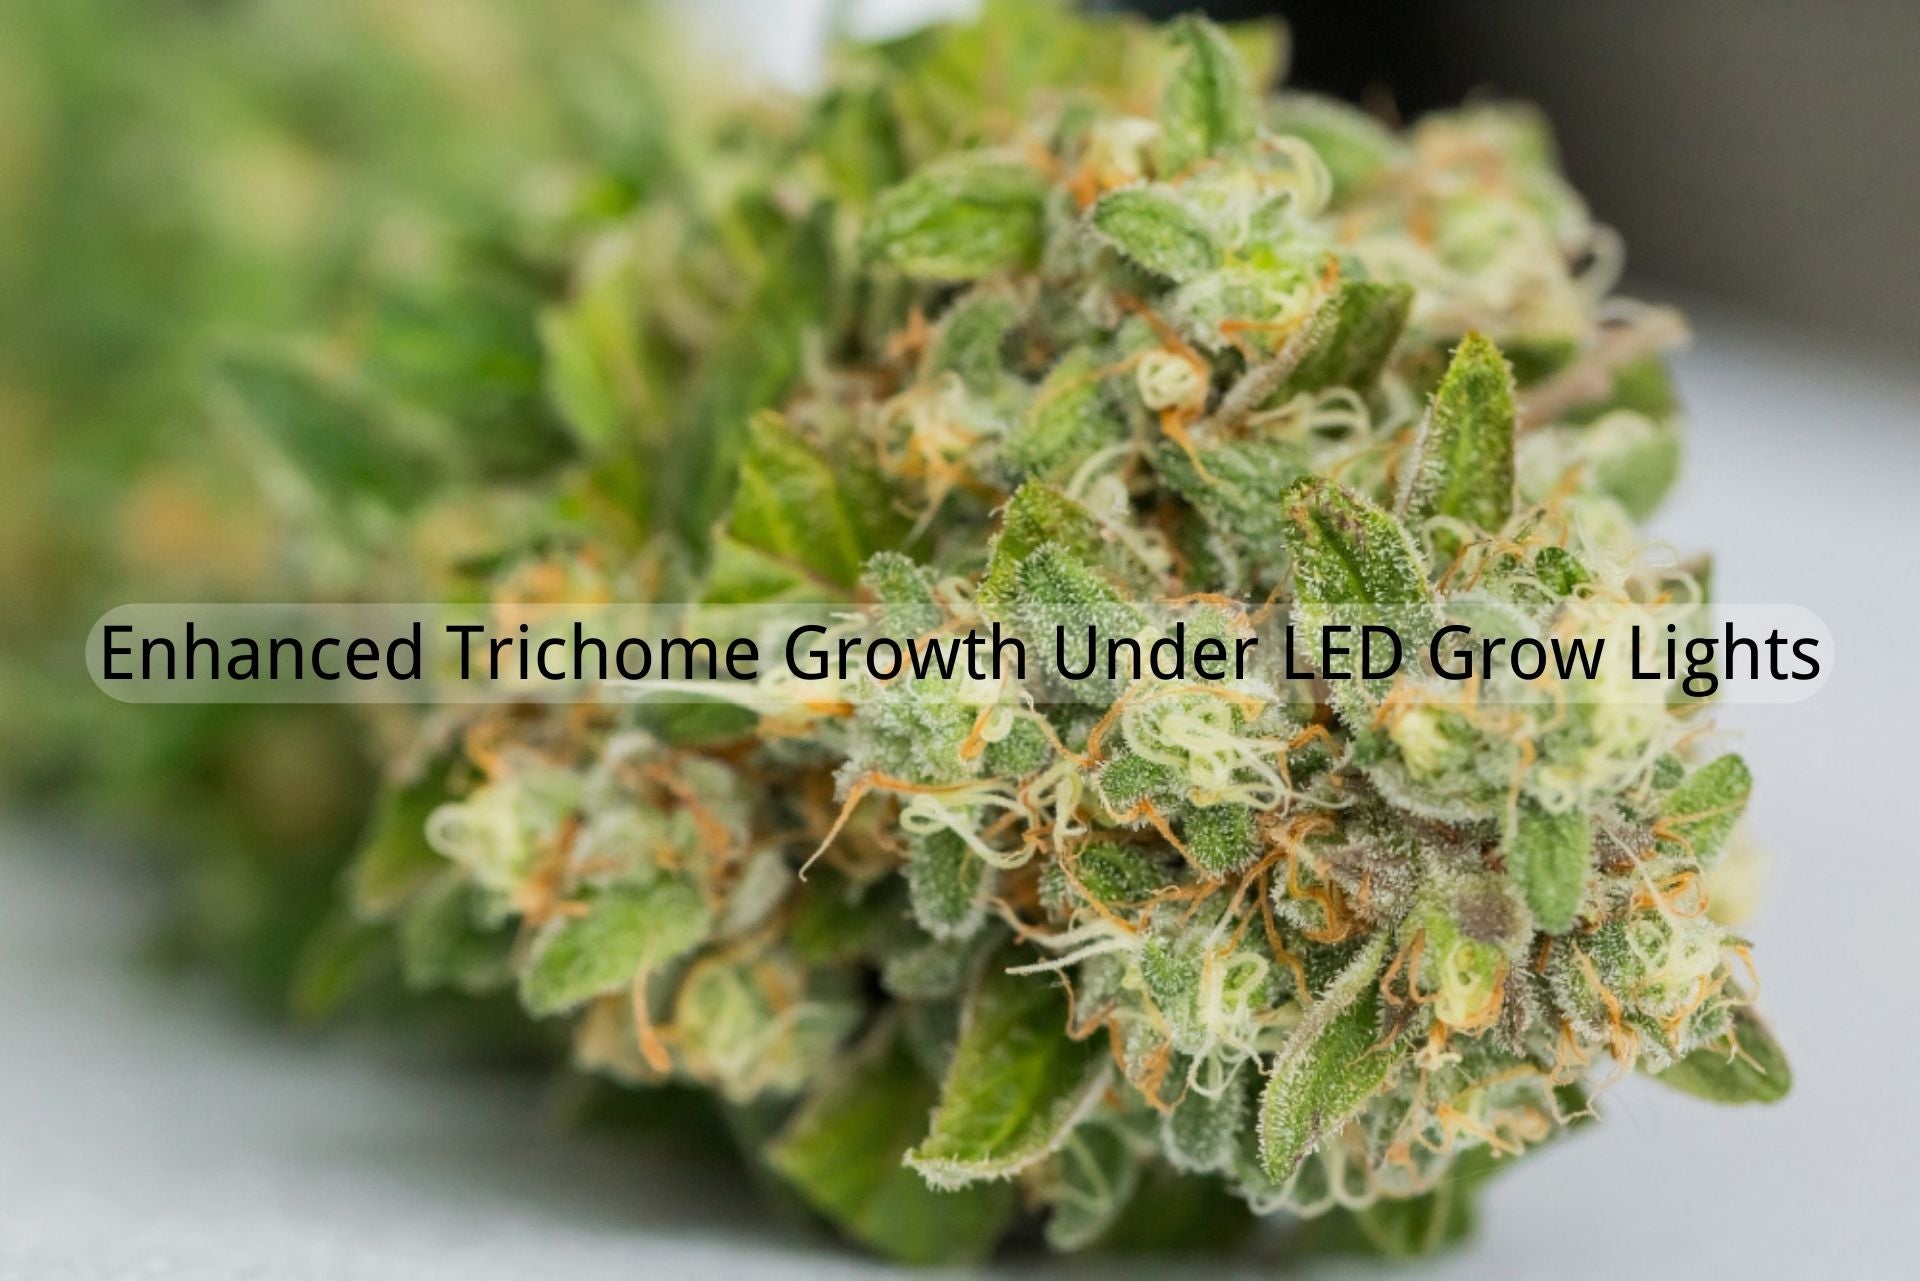 Enhanced Trichome Growth Under LED Grow Lights